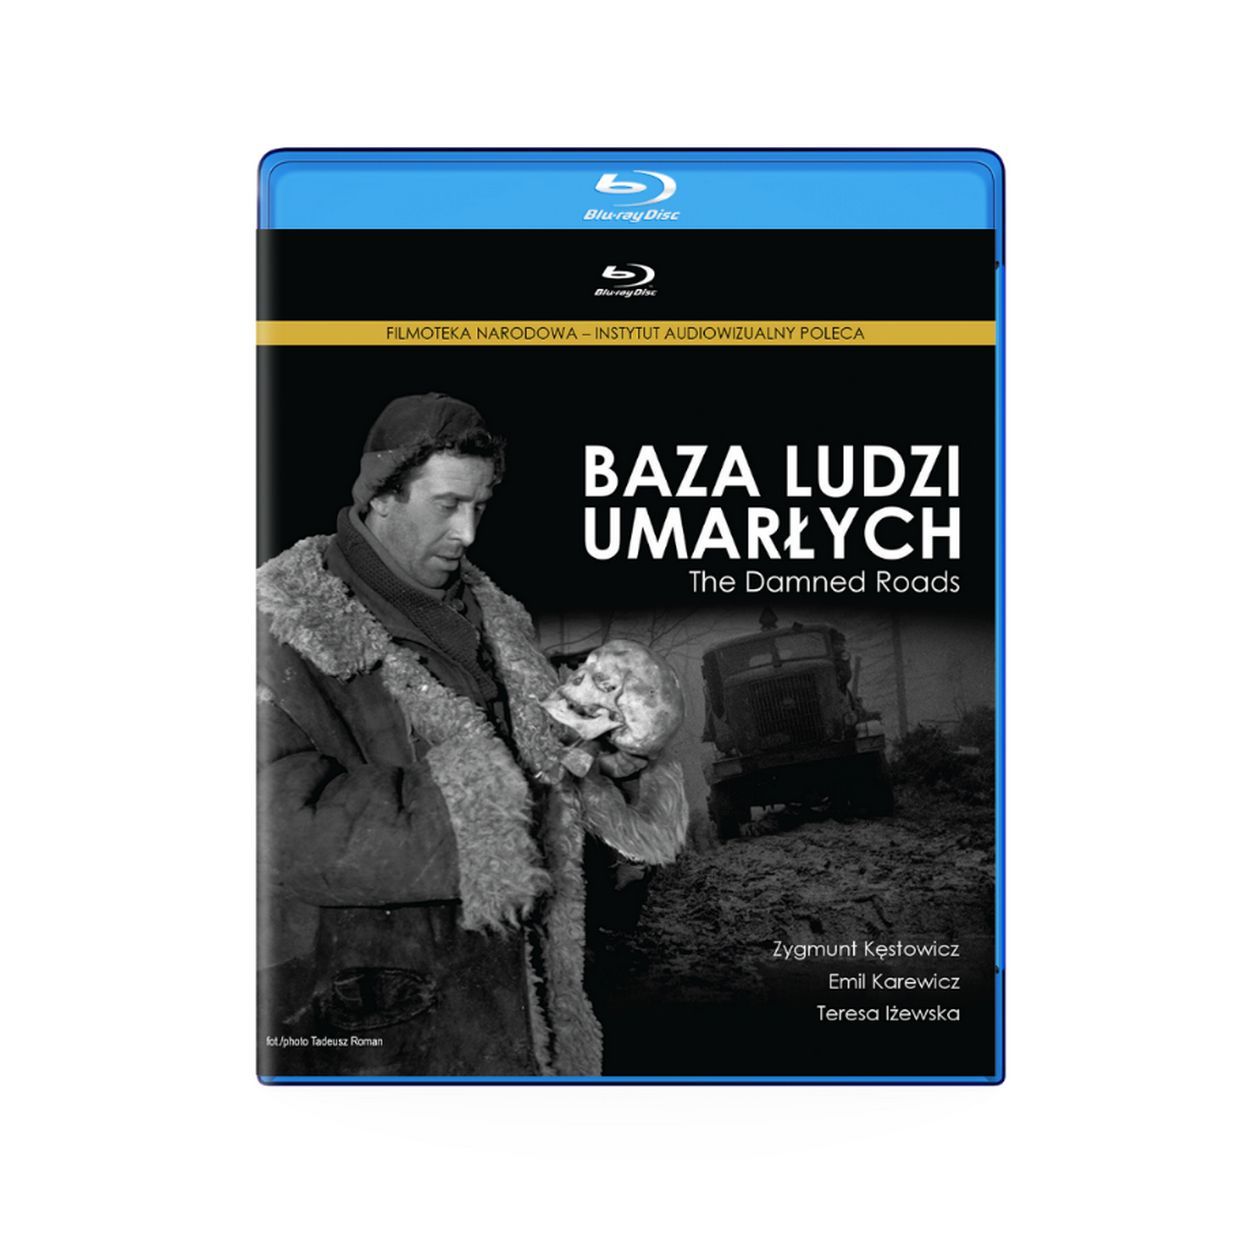 The Depot of the Dead / Baza ludzi umarlych Blu-Ray